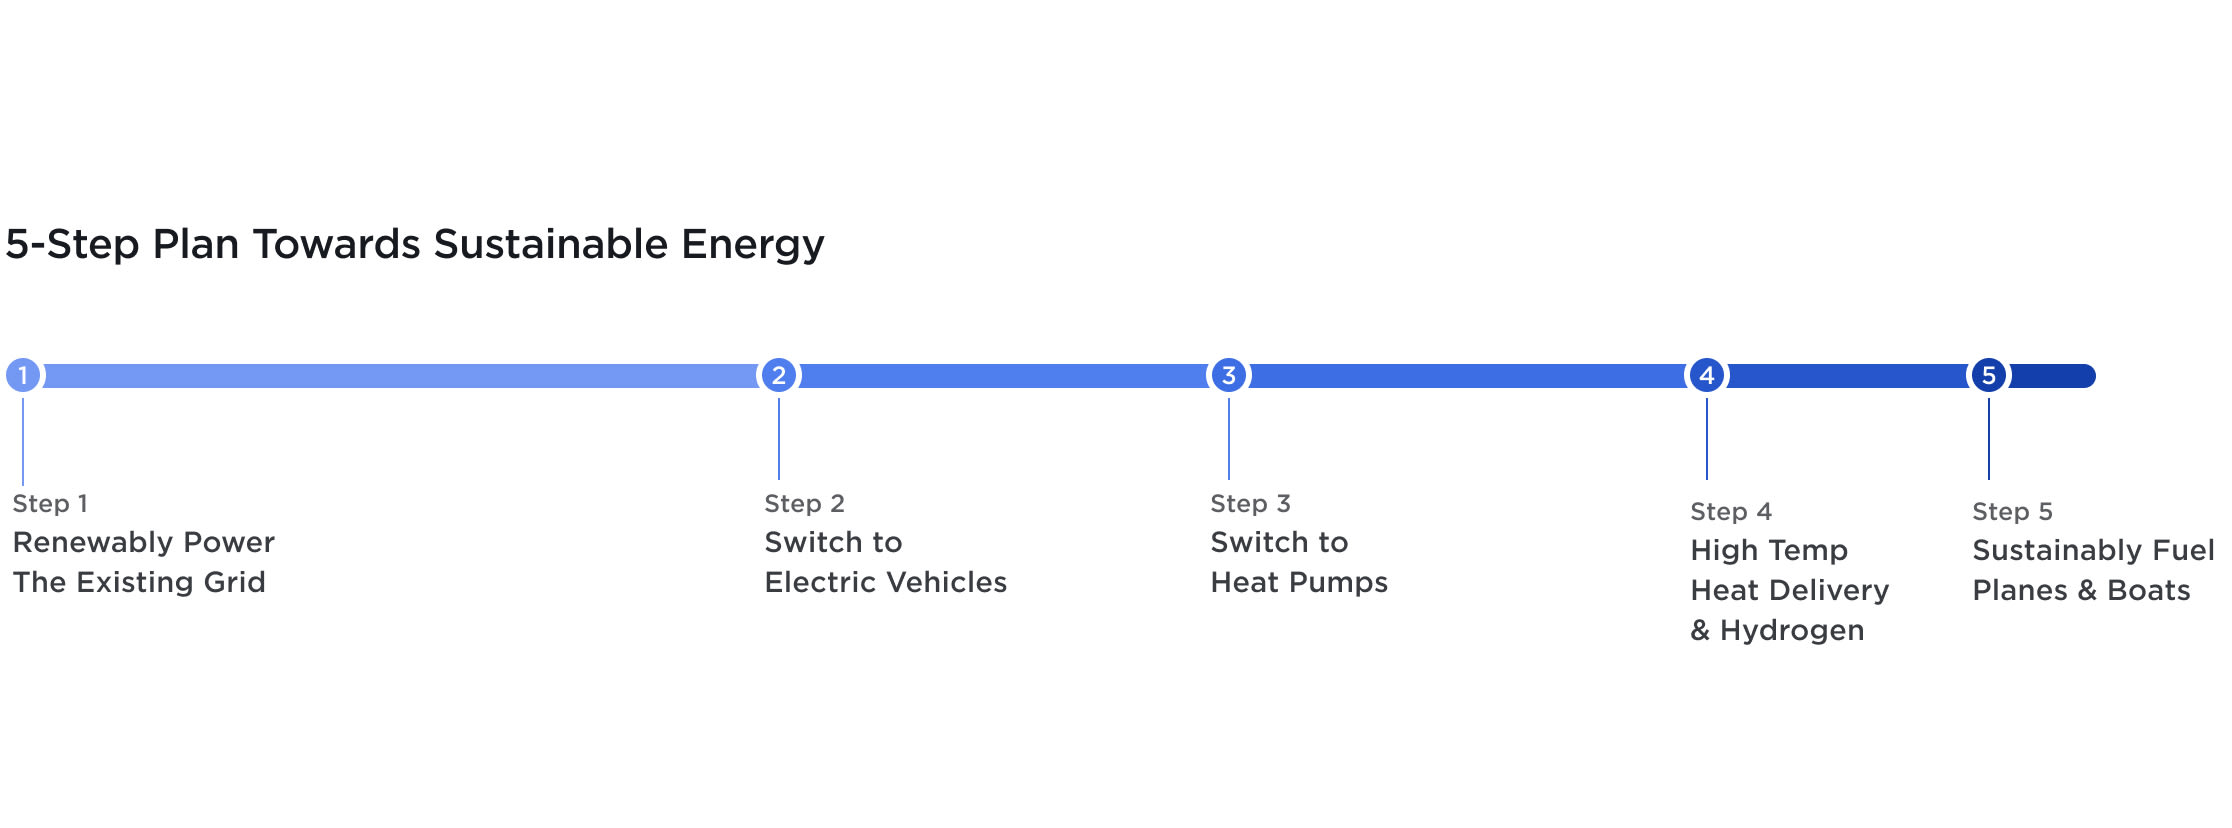 Tesla's 5 step plan to sustainability 